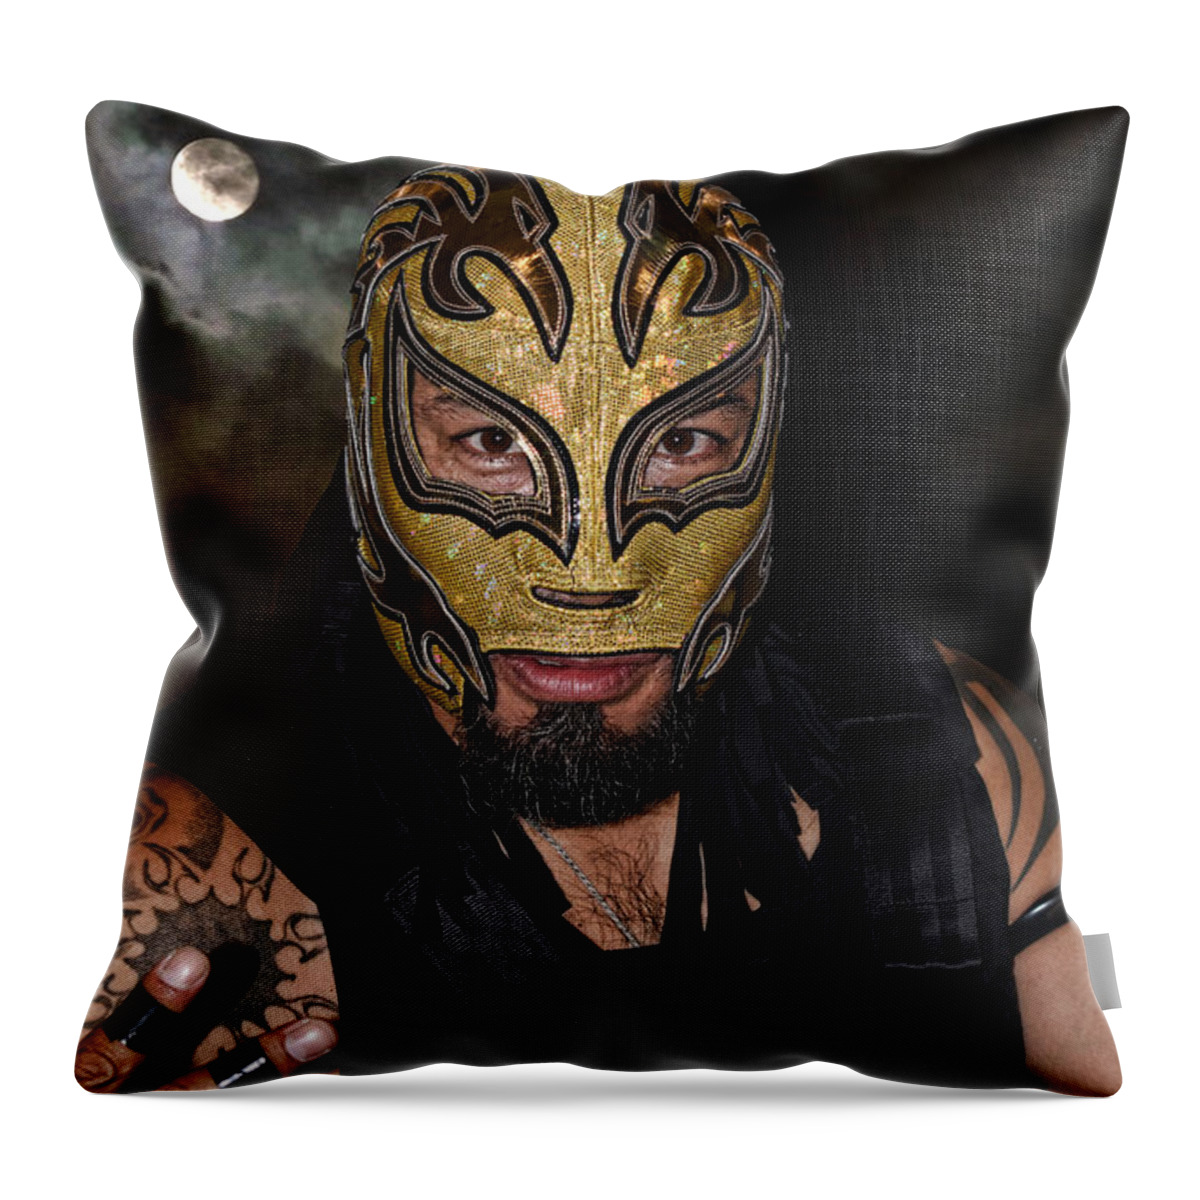 Estilo Rudo Throw Pillow featuring the digital art Masked Luchador Estilo Rudo #1 by Jim Fitzpatrick